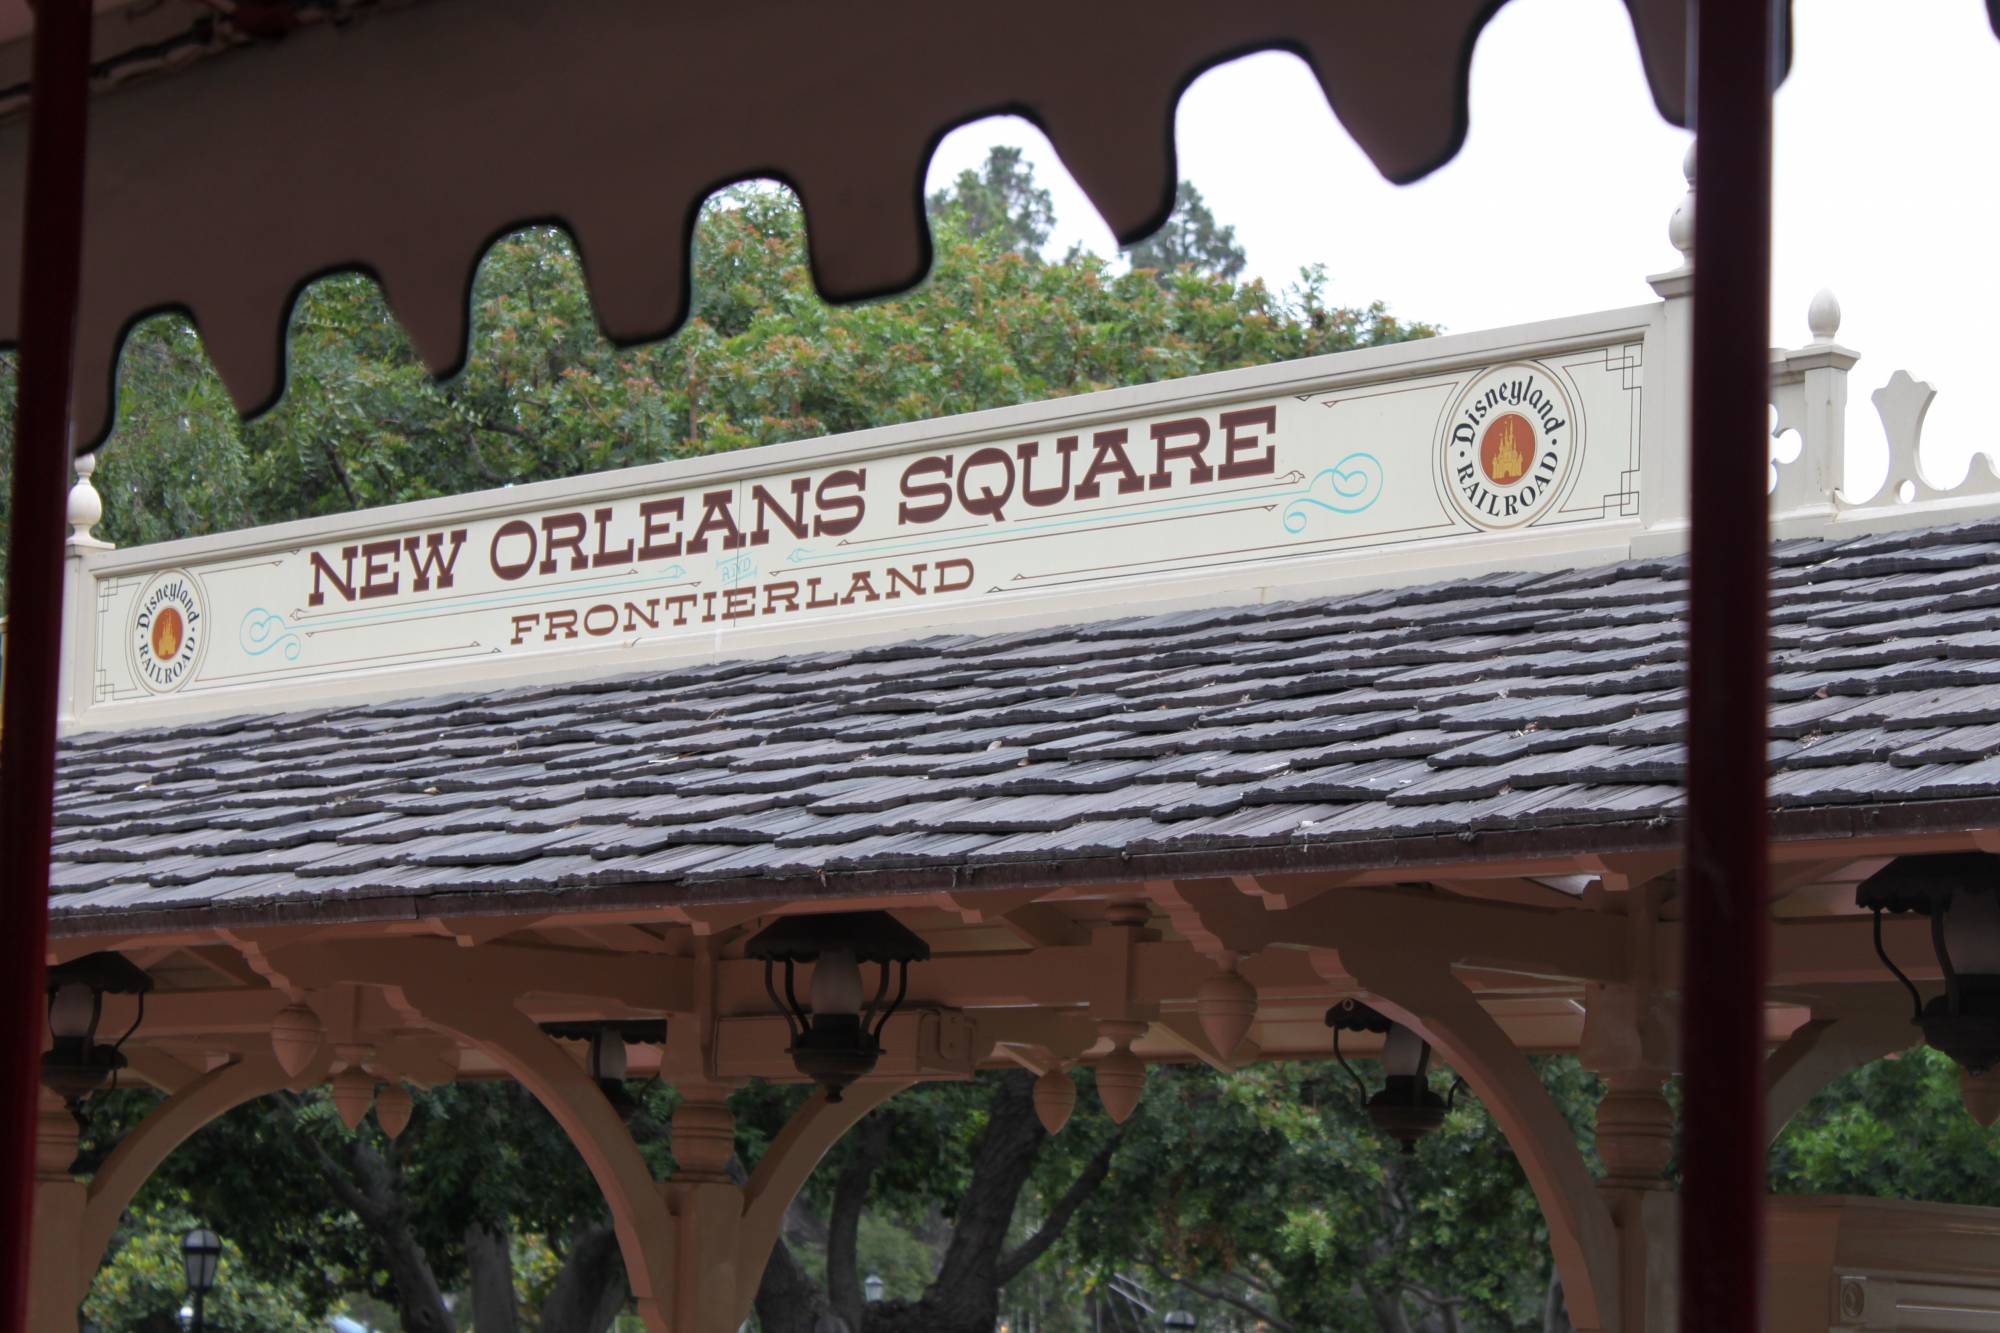 Disneyland - New Orleans Square train station sign